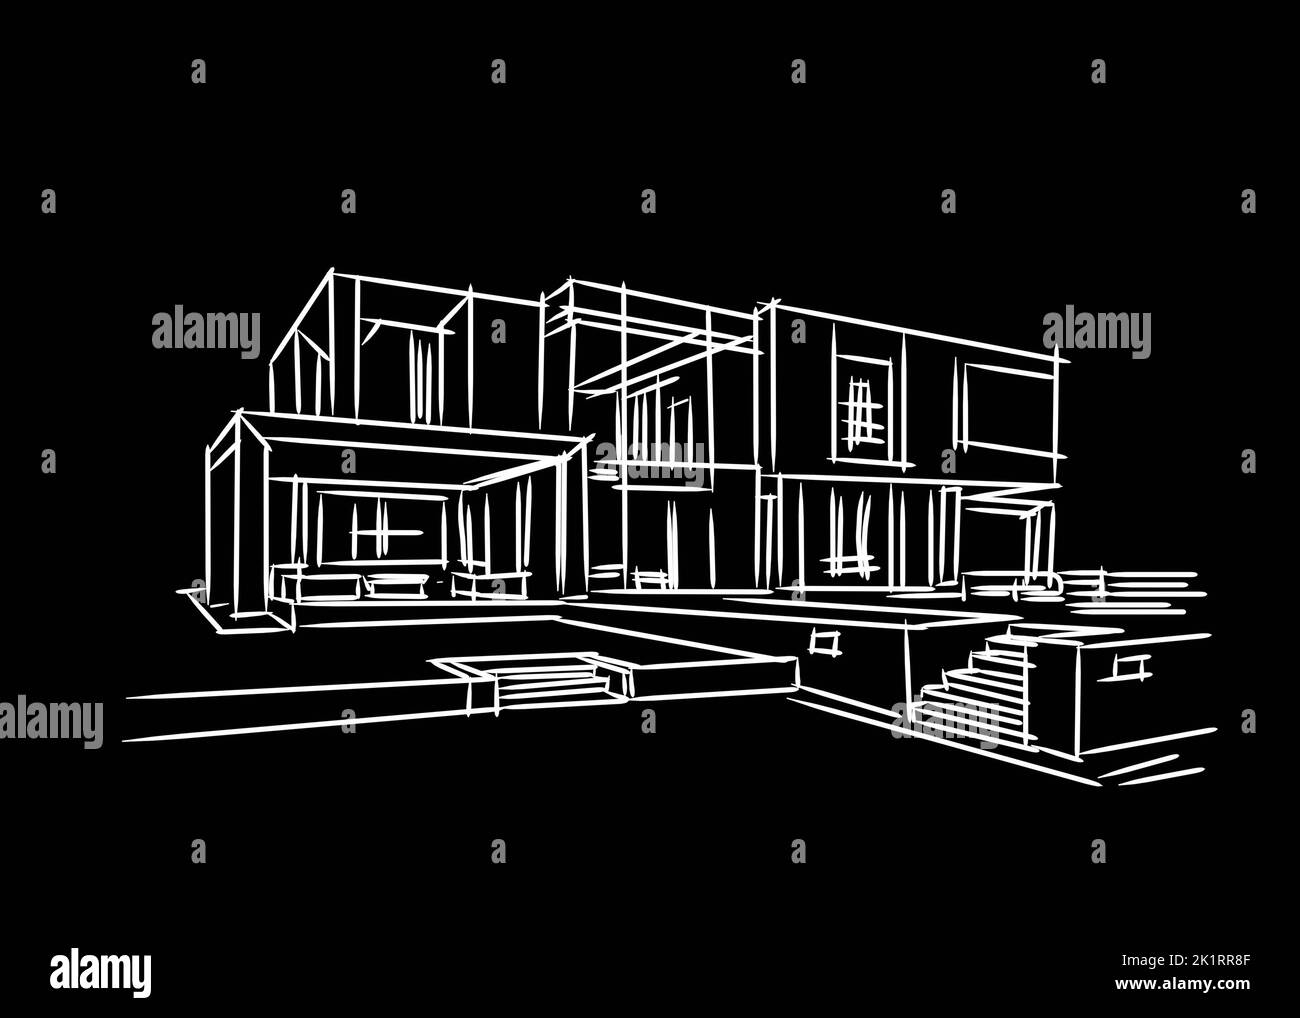 house sketch design for graphic design Stock Photo